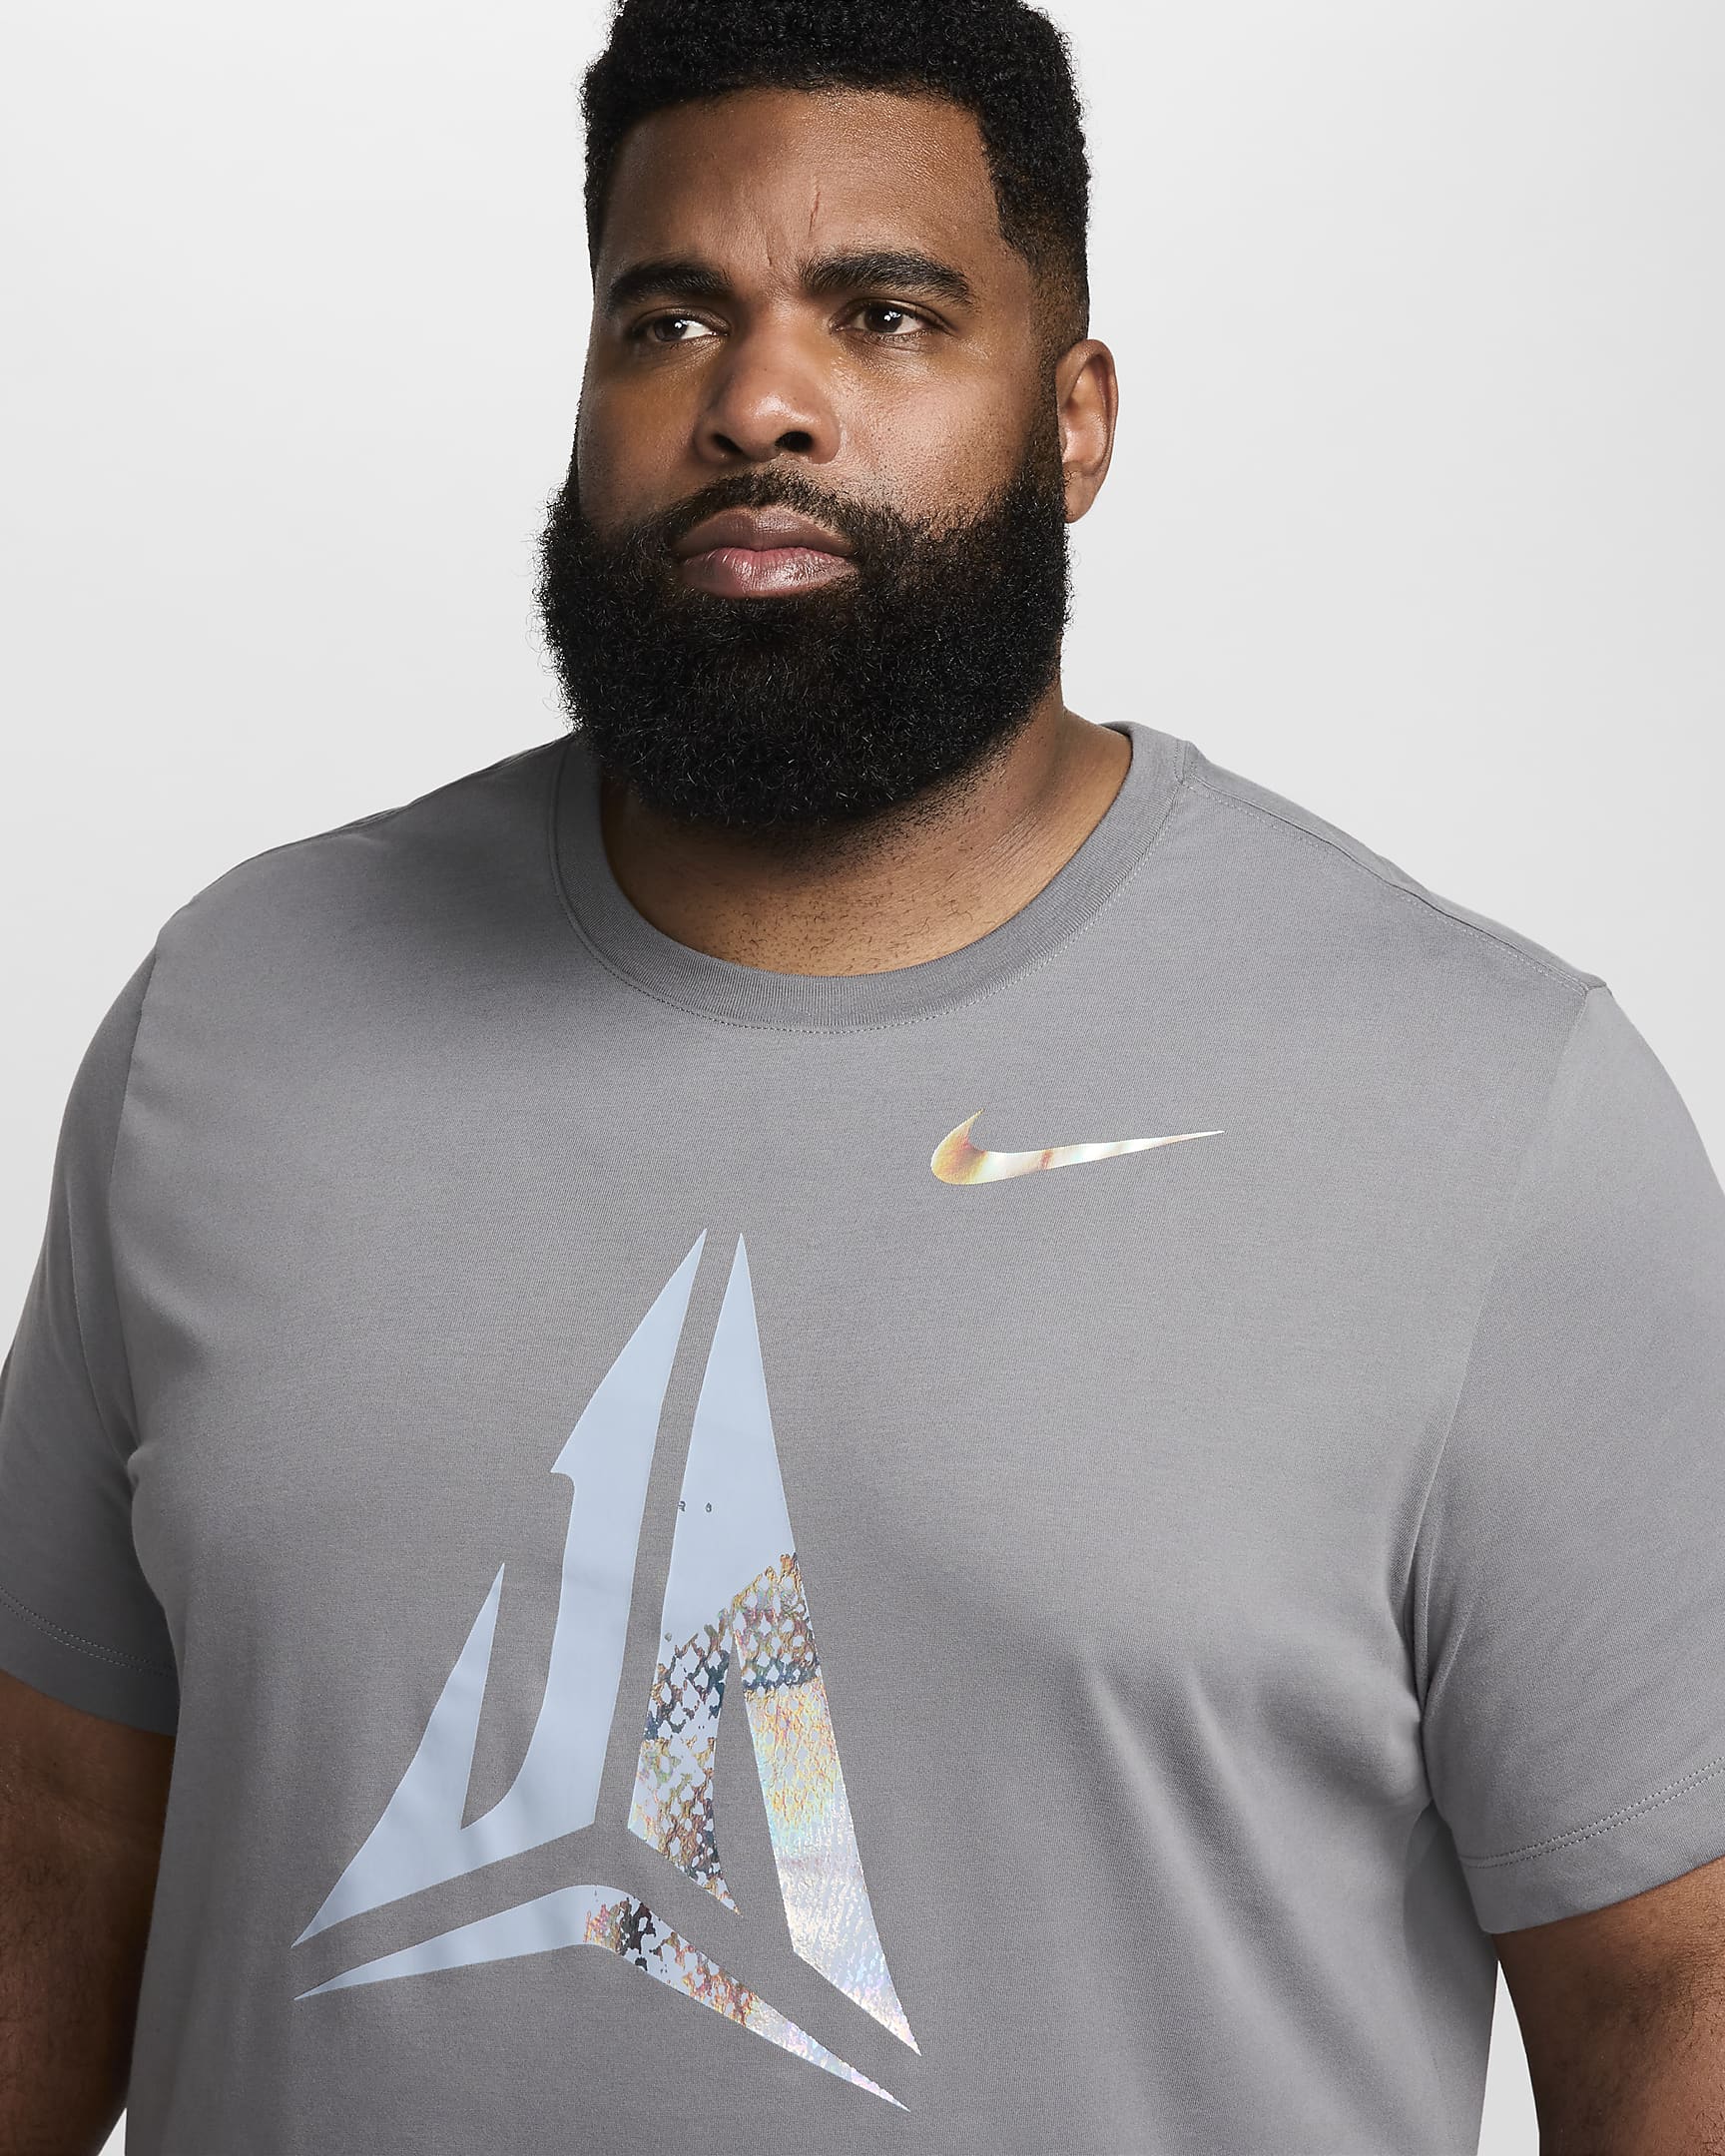 Ja Men's Dri-FIT Basketball T-Shirt - Smoke Grey